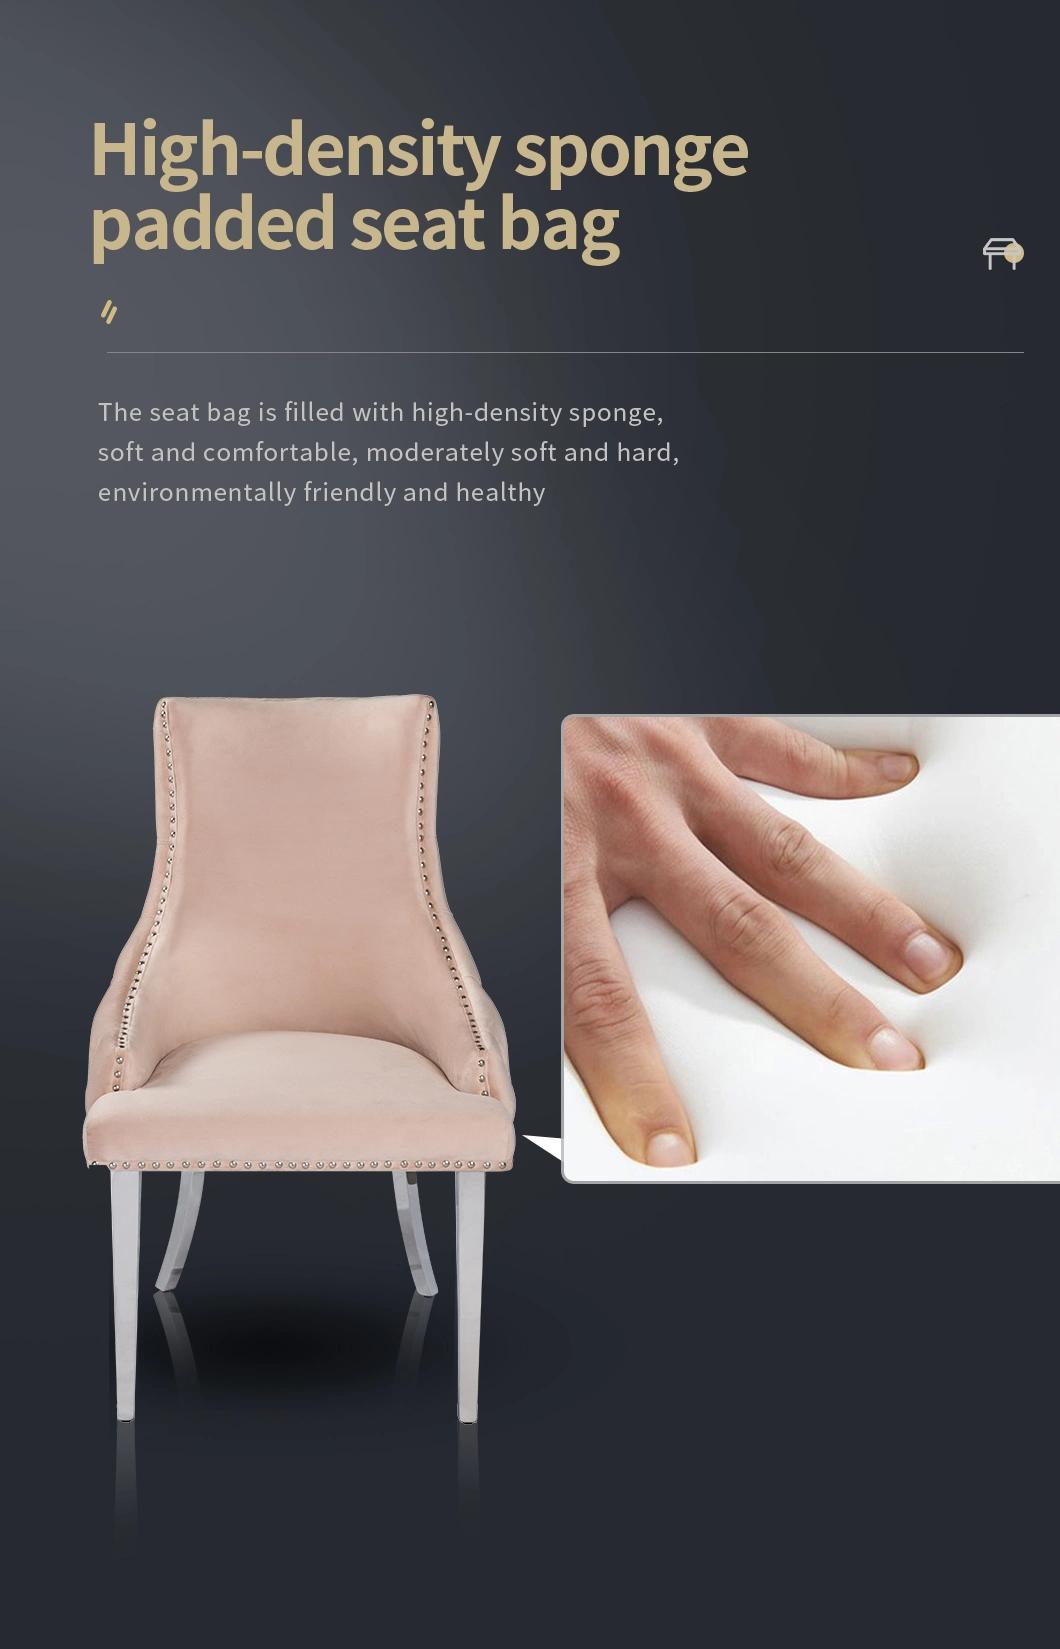 Fabric New Diron Carton Box Customized China Chair Restaurant Furniture